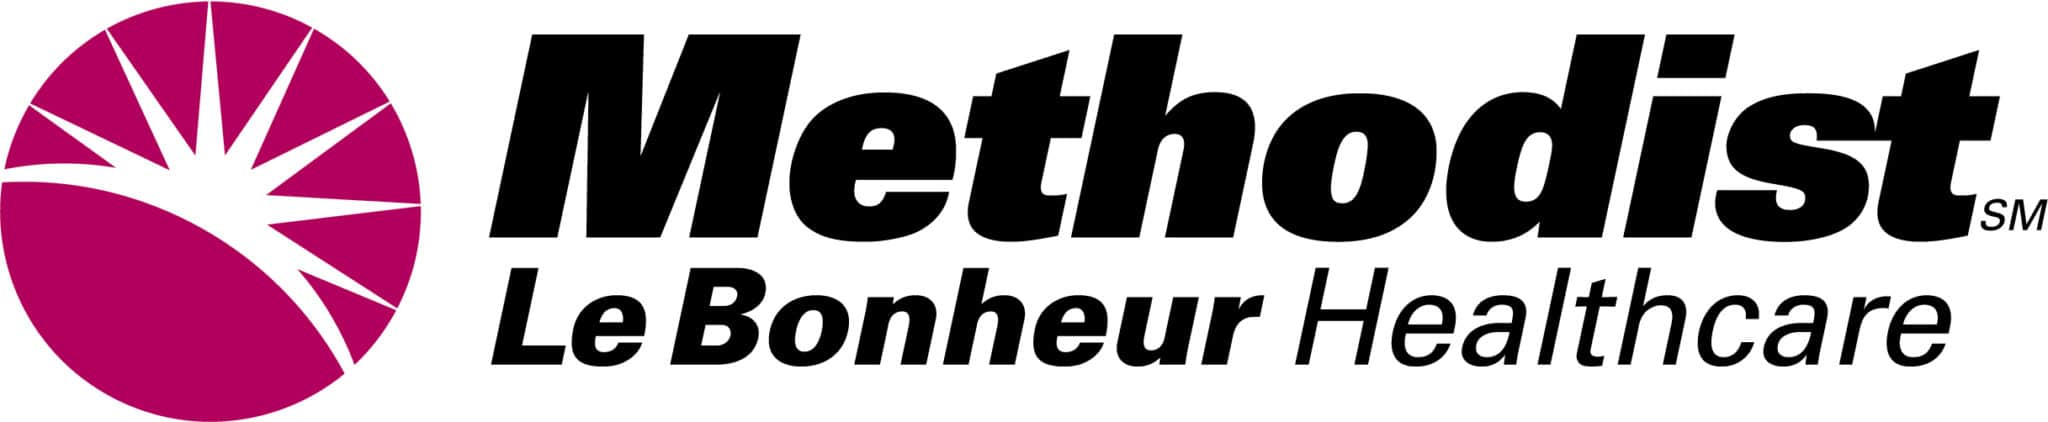 Logo saying Methodist Le Bonheur Healthcare